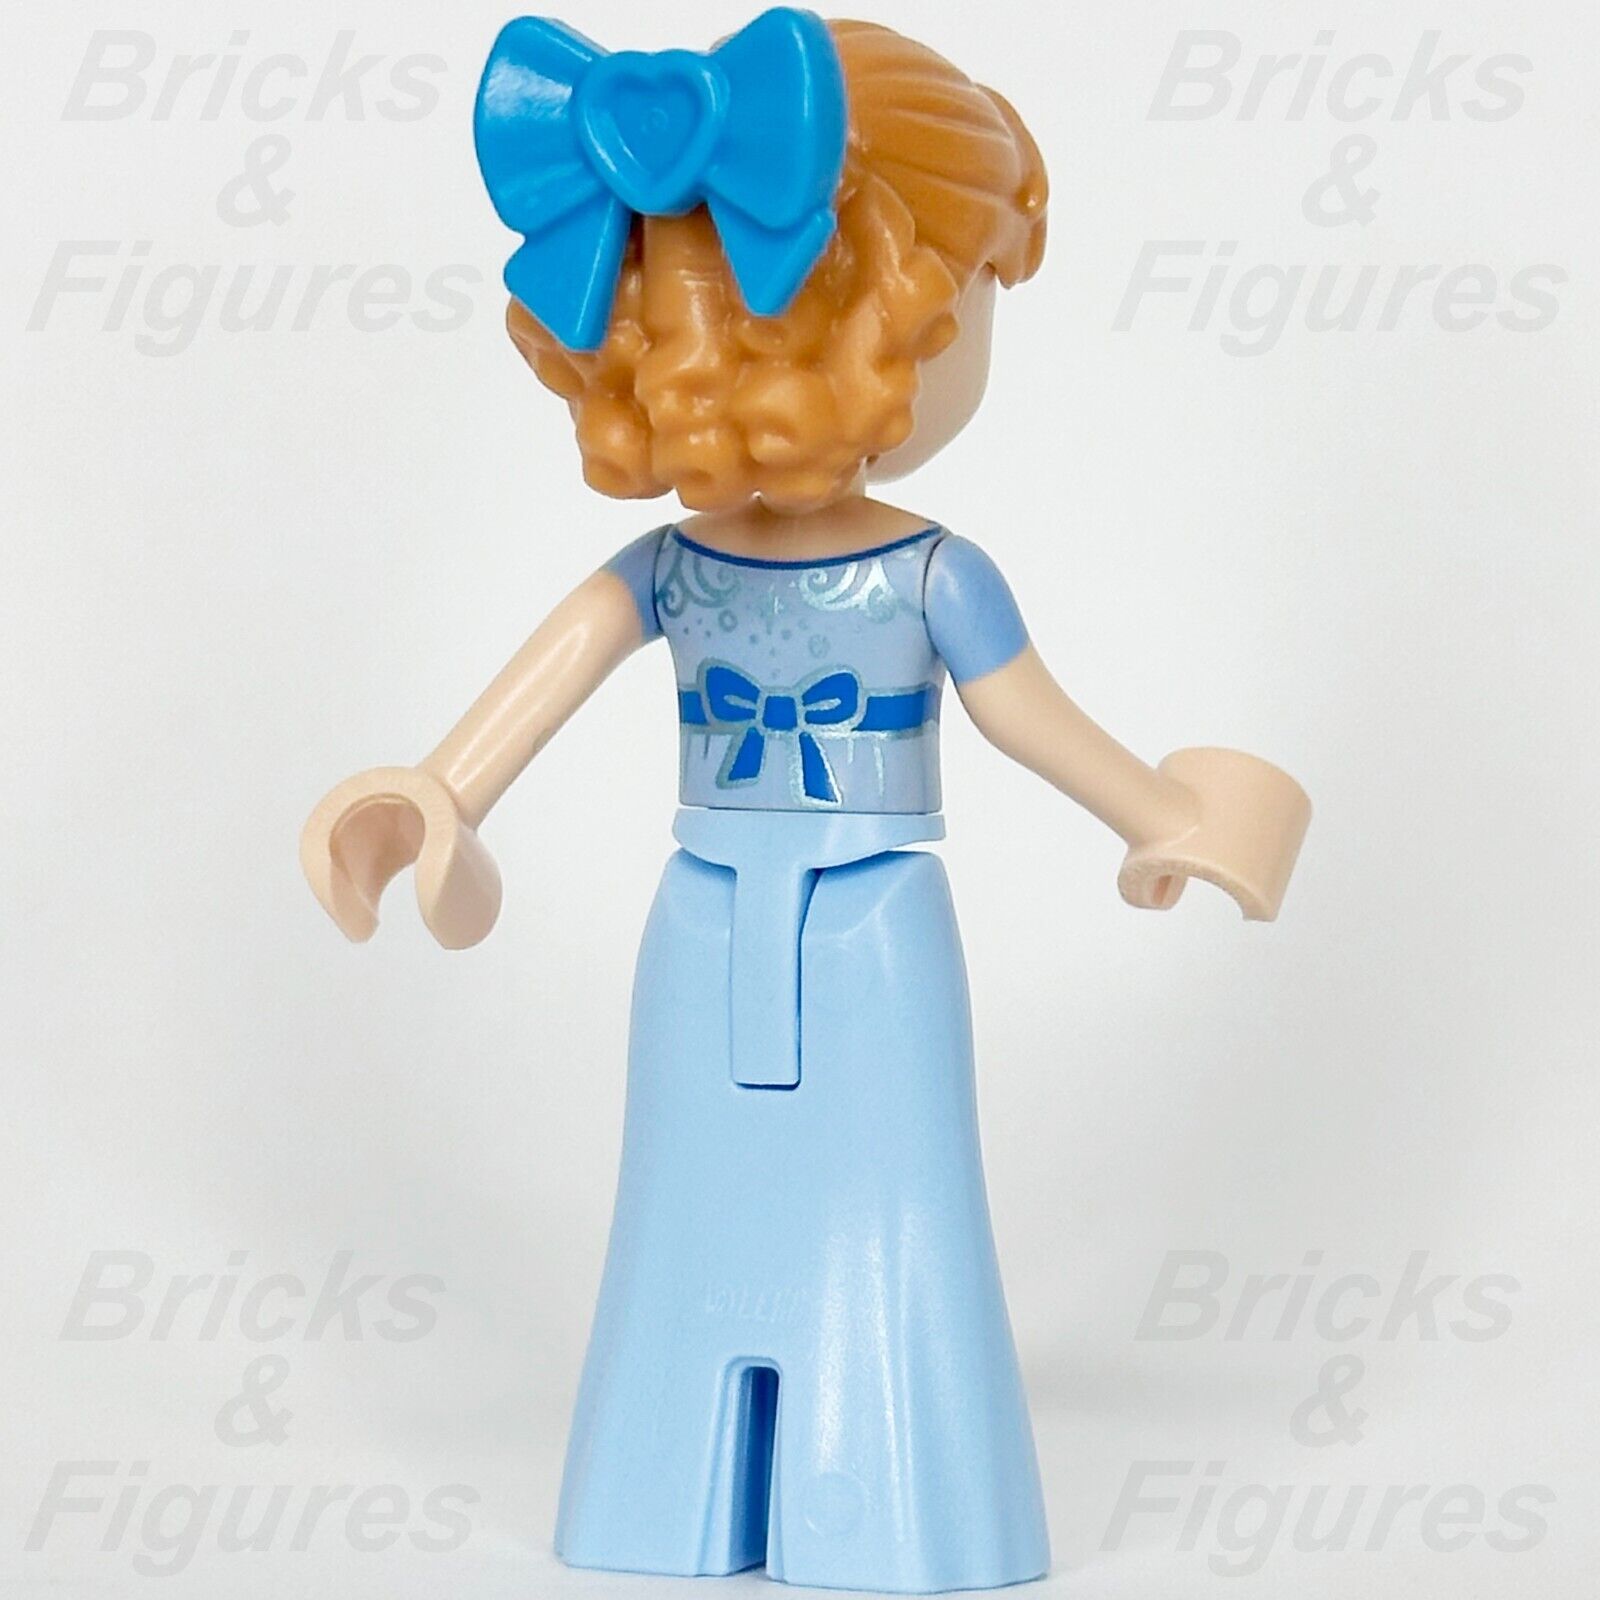 LEGO Disney Wendy Darling Minifigure Disney 100 Princess 43215 dis122 Minifig